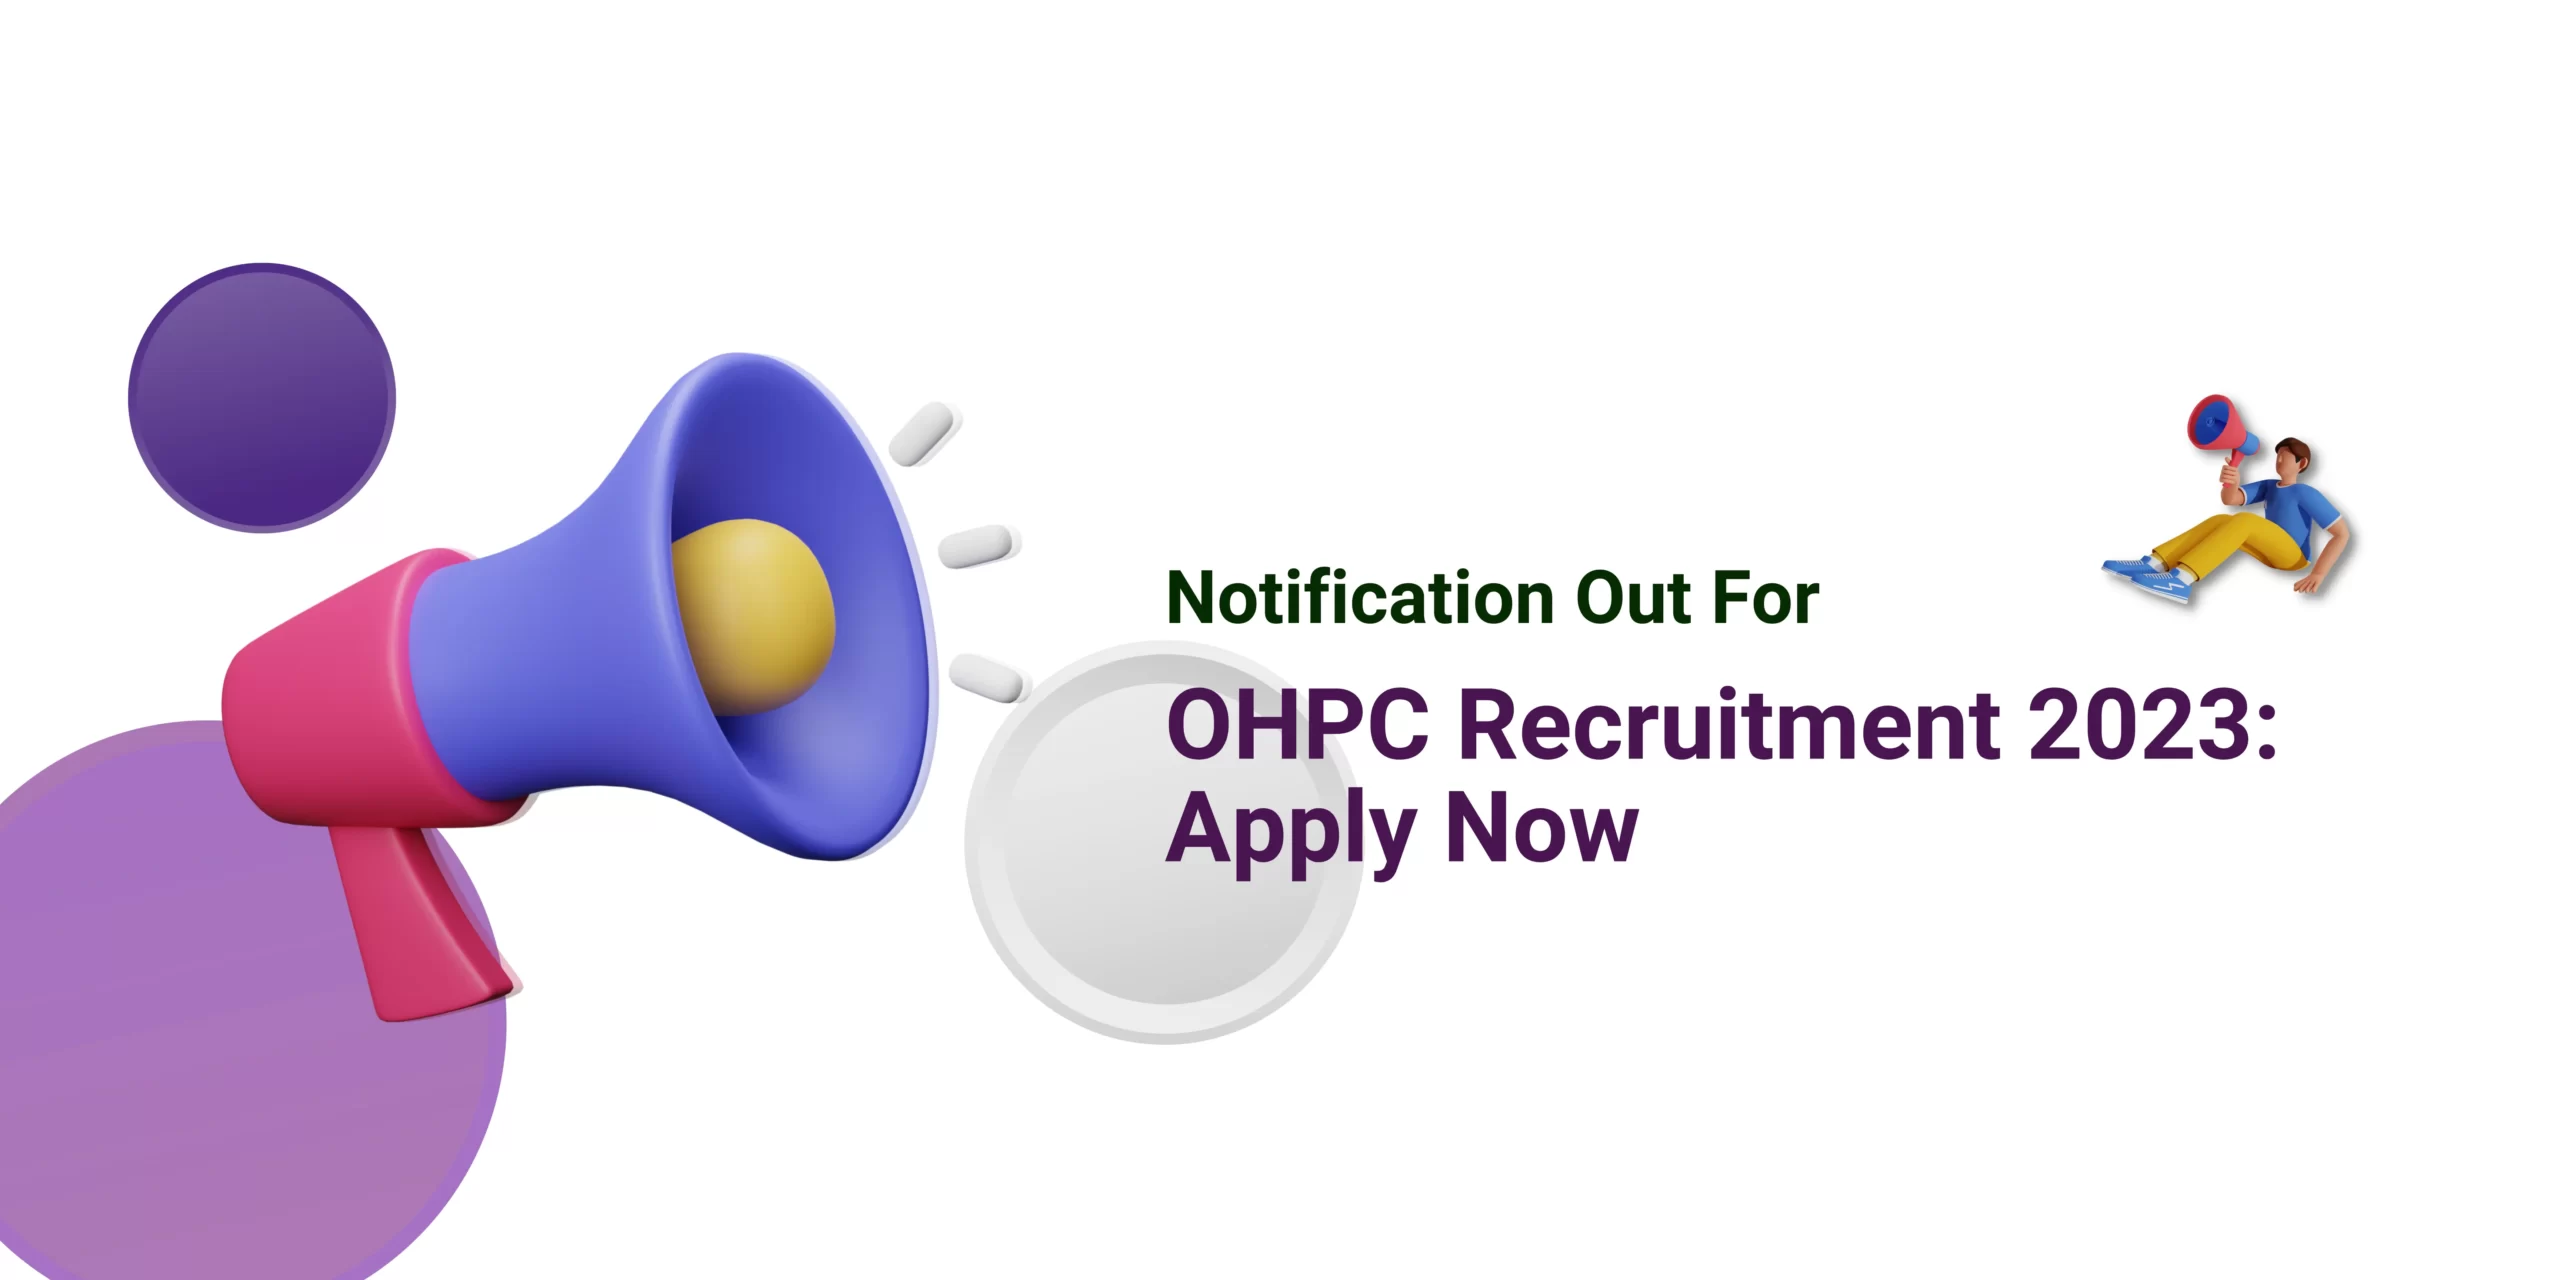 OHPC Recruitment 2023: Apply Now